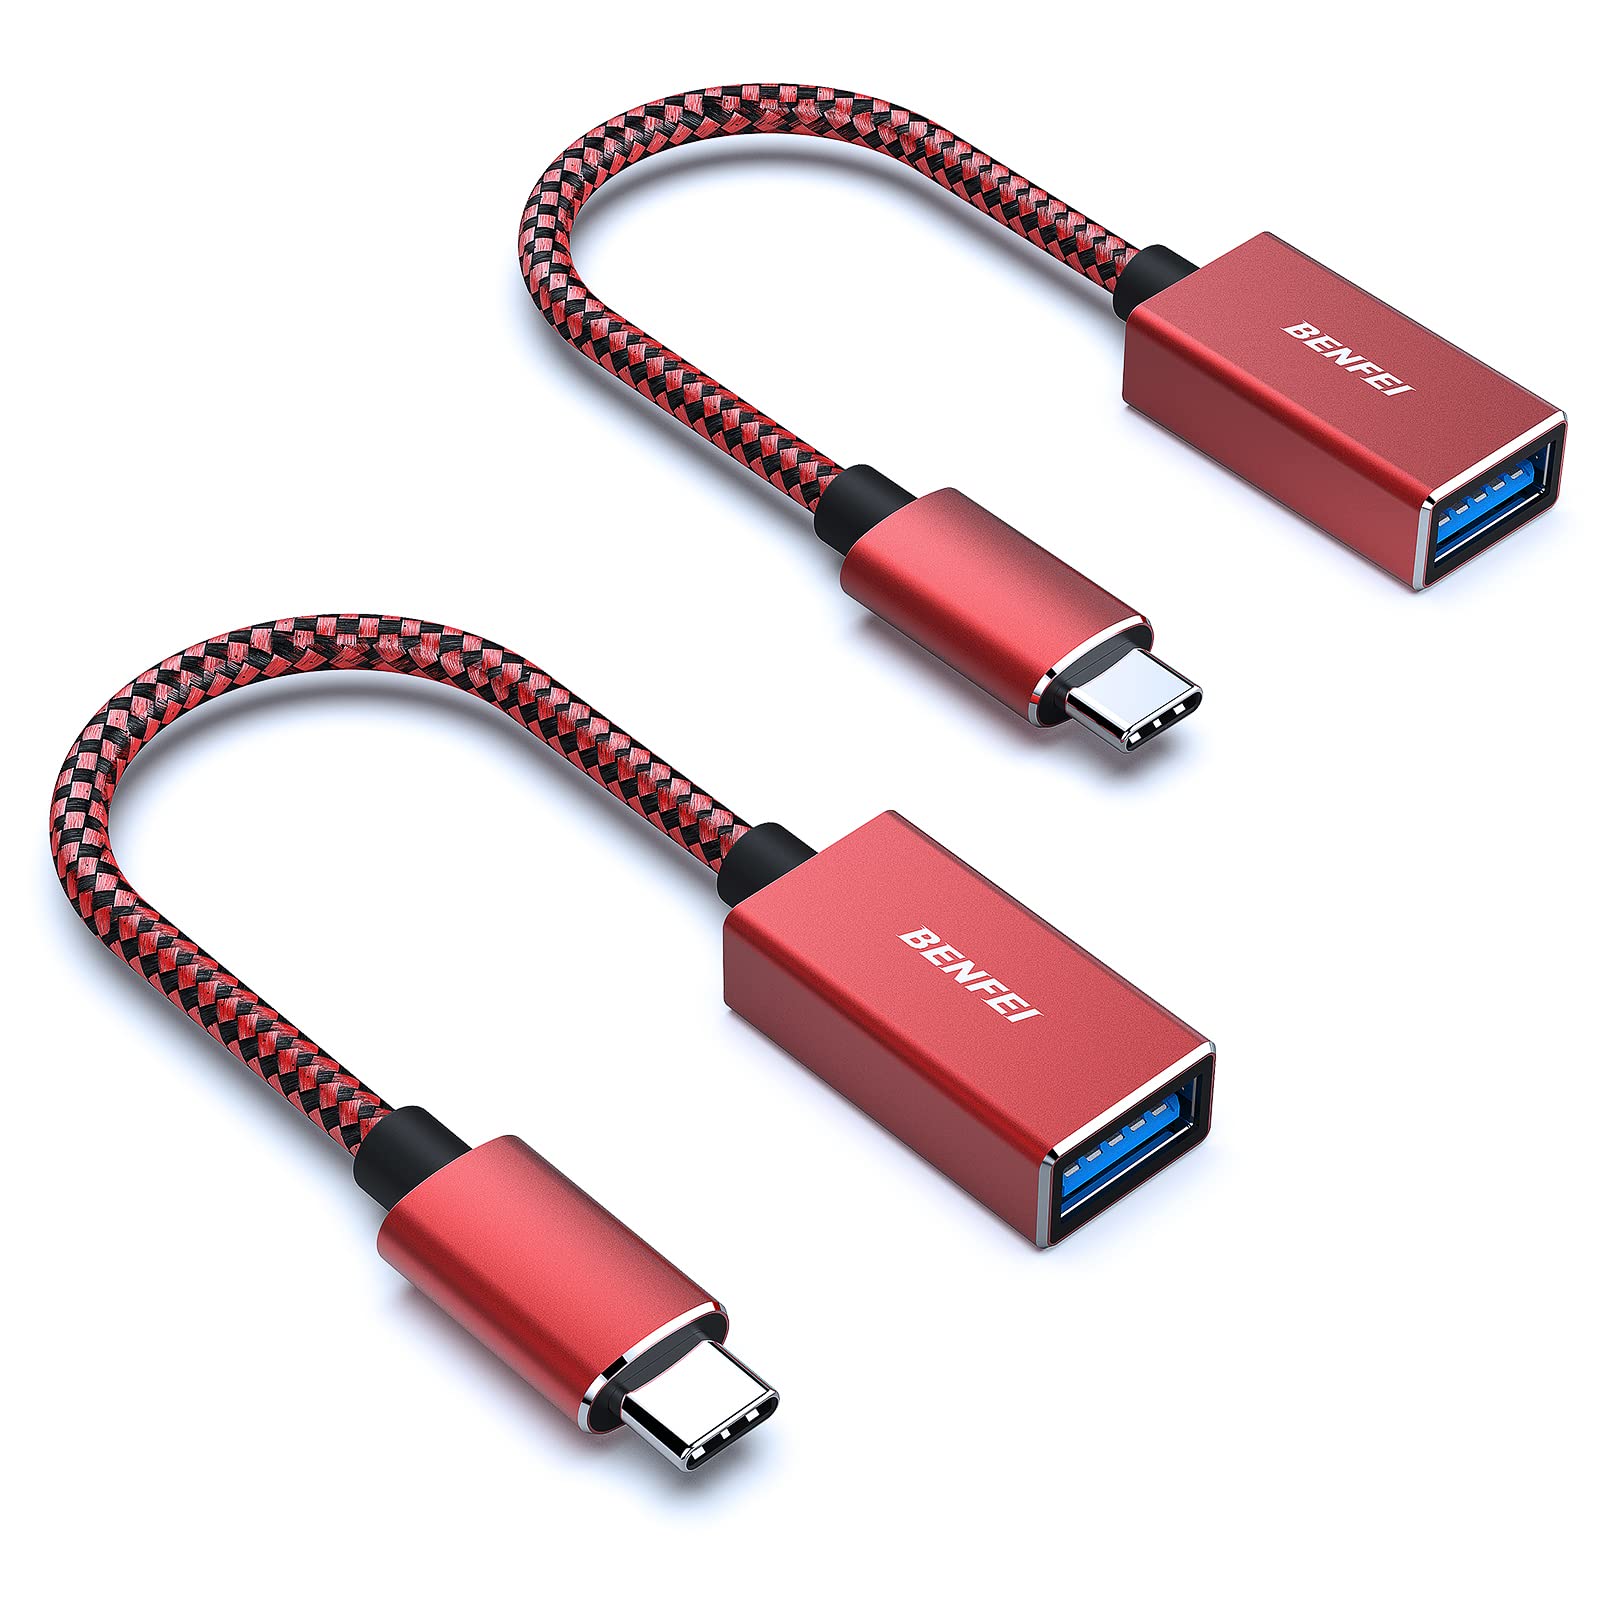 BENFEI USB-C USB 3.0 変換アダプタ 2個セット Type C USB-A 最大5Gbps タイプc - USB 3.0 アダプタ iPhone 15 Pro/Max, MacBook Pro/Air 2023, iPad Pro, iMac, S23, XPS 17 その他 USB-C 端末用...赤